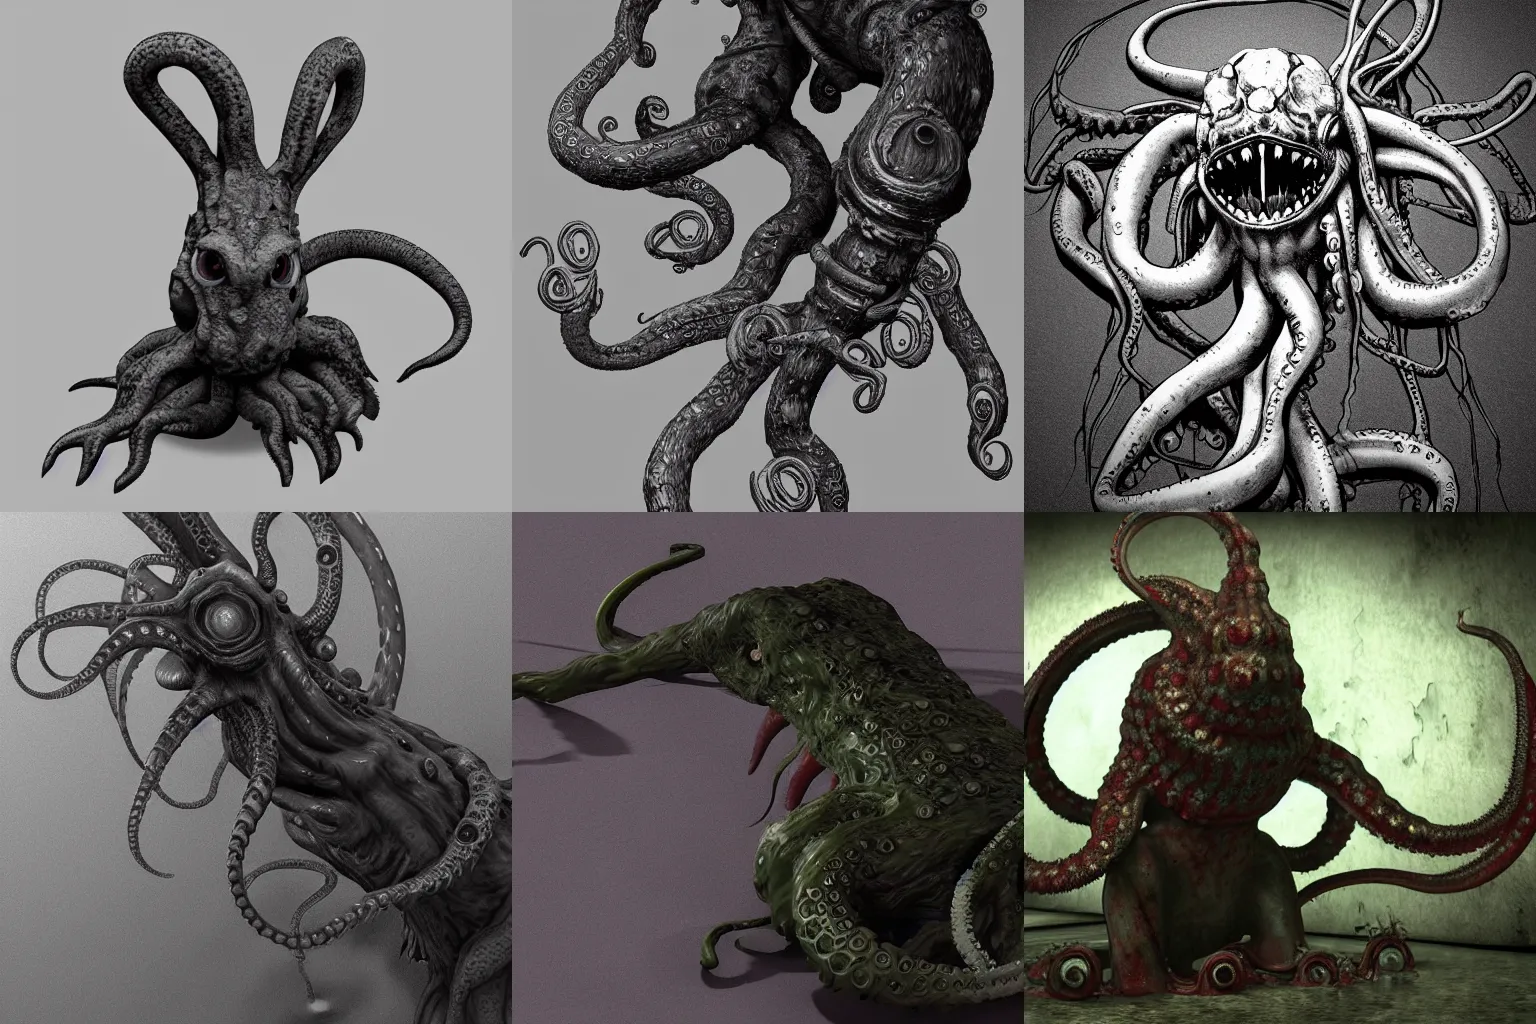 Prompt: hp lovecraft rabbit monster, tentacles coming out of it, horror, resident evil, trending on artstation HD, concept art, 3d render